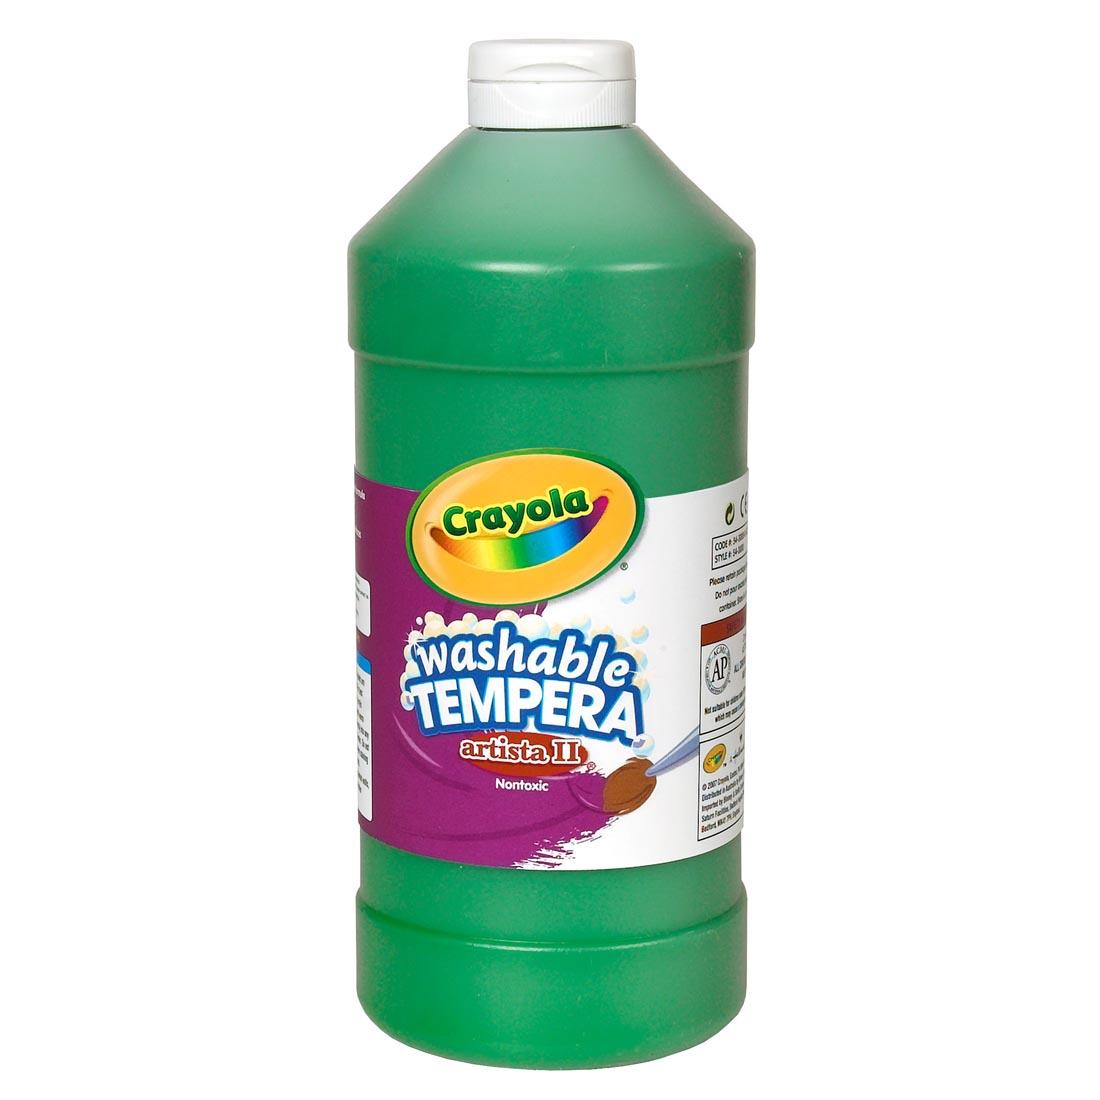 Bottle of Green Crayola Artista II Washable Tempera Paint